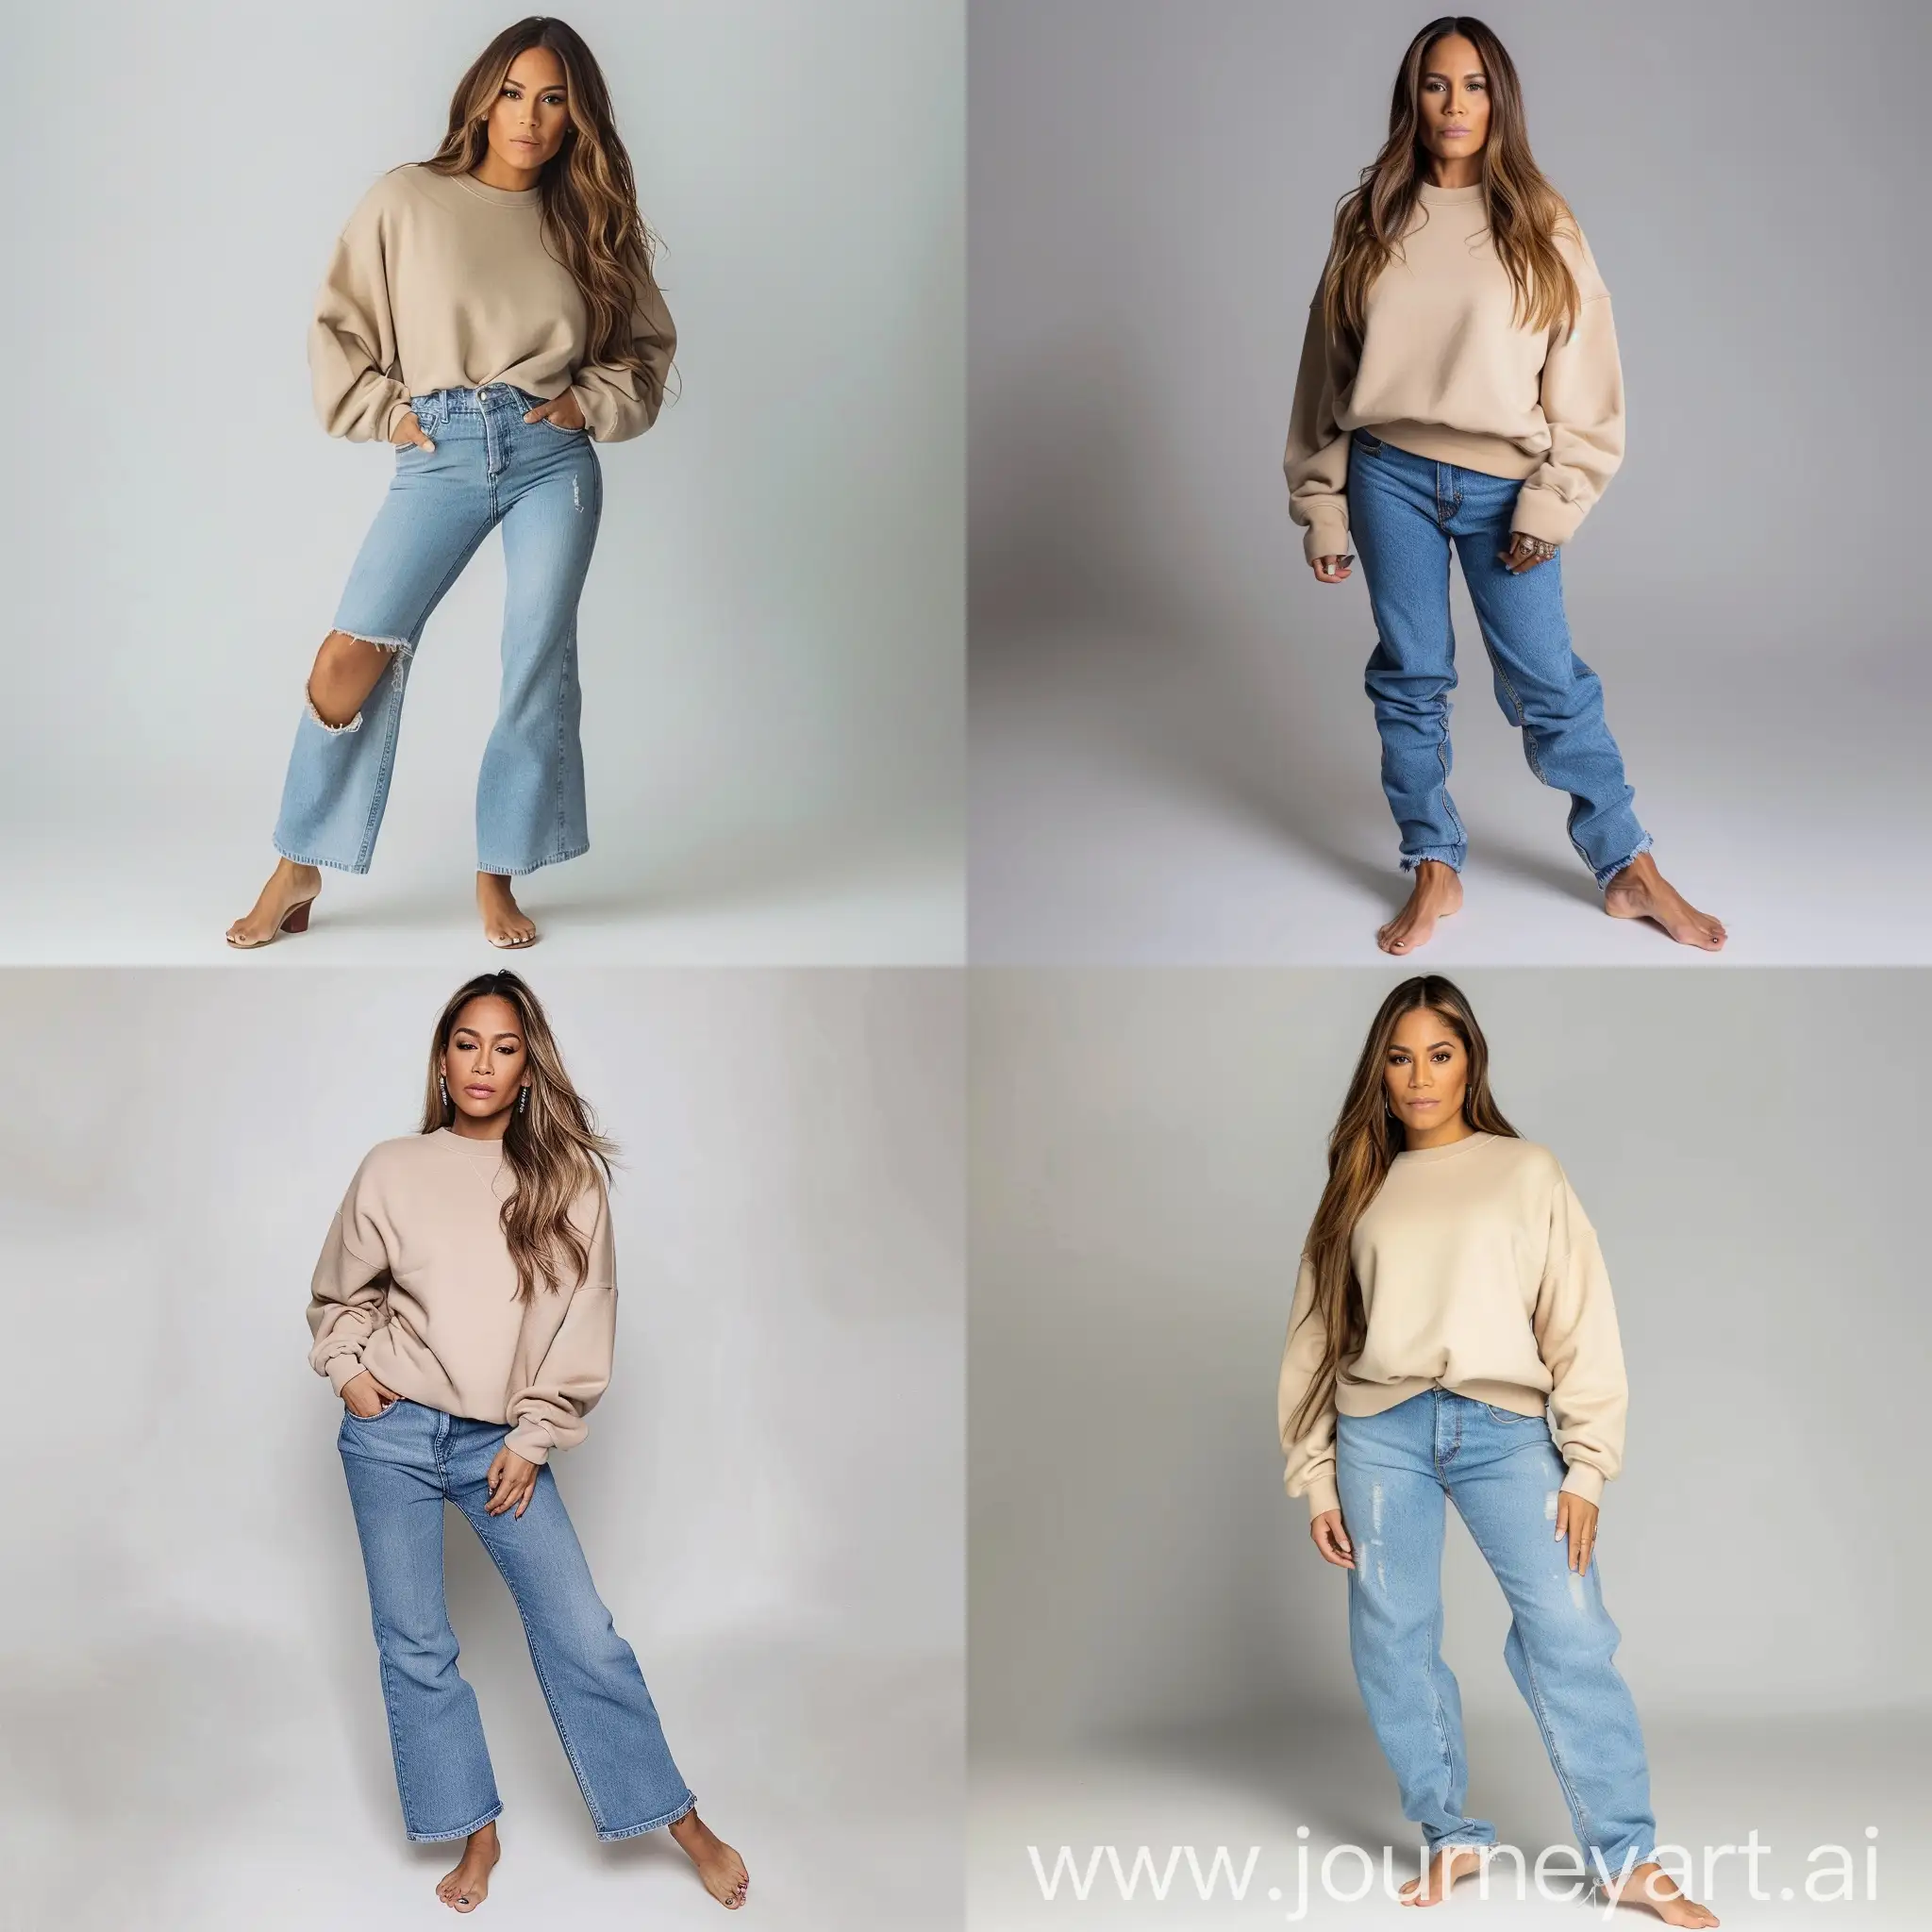 Jennifer-Lopez-Fashionably-Stands-Tall-in-Beige-Sweatshirt-and-Blue-Jeans